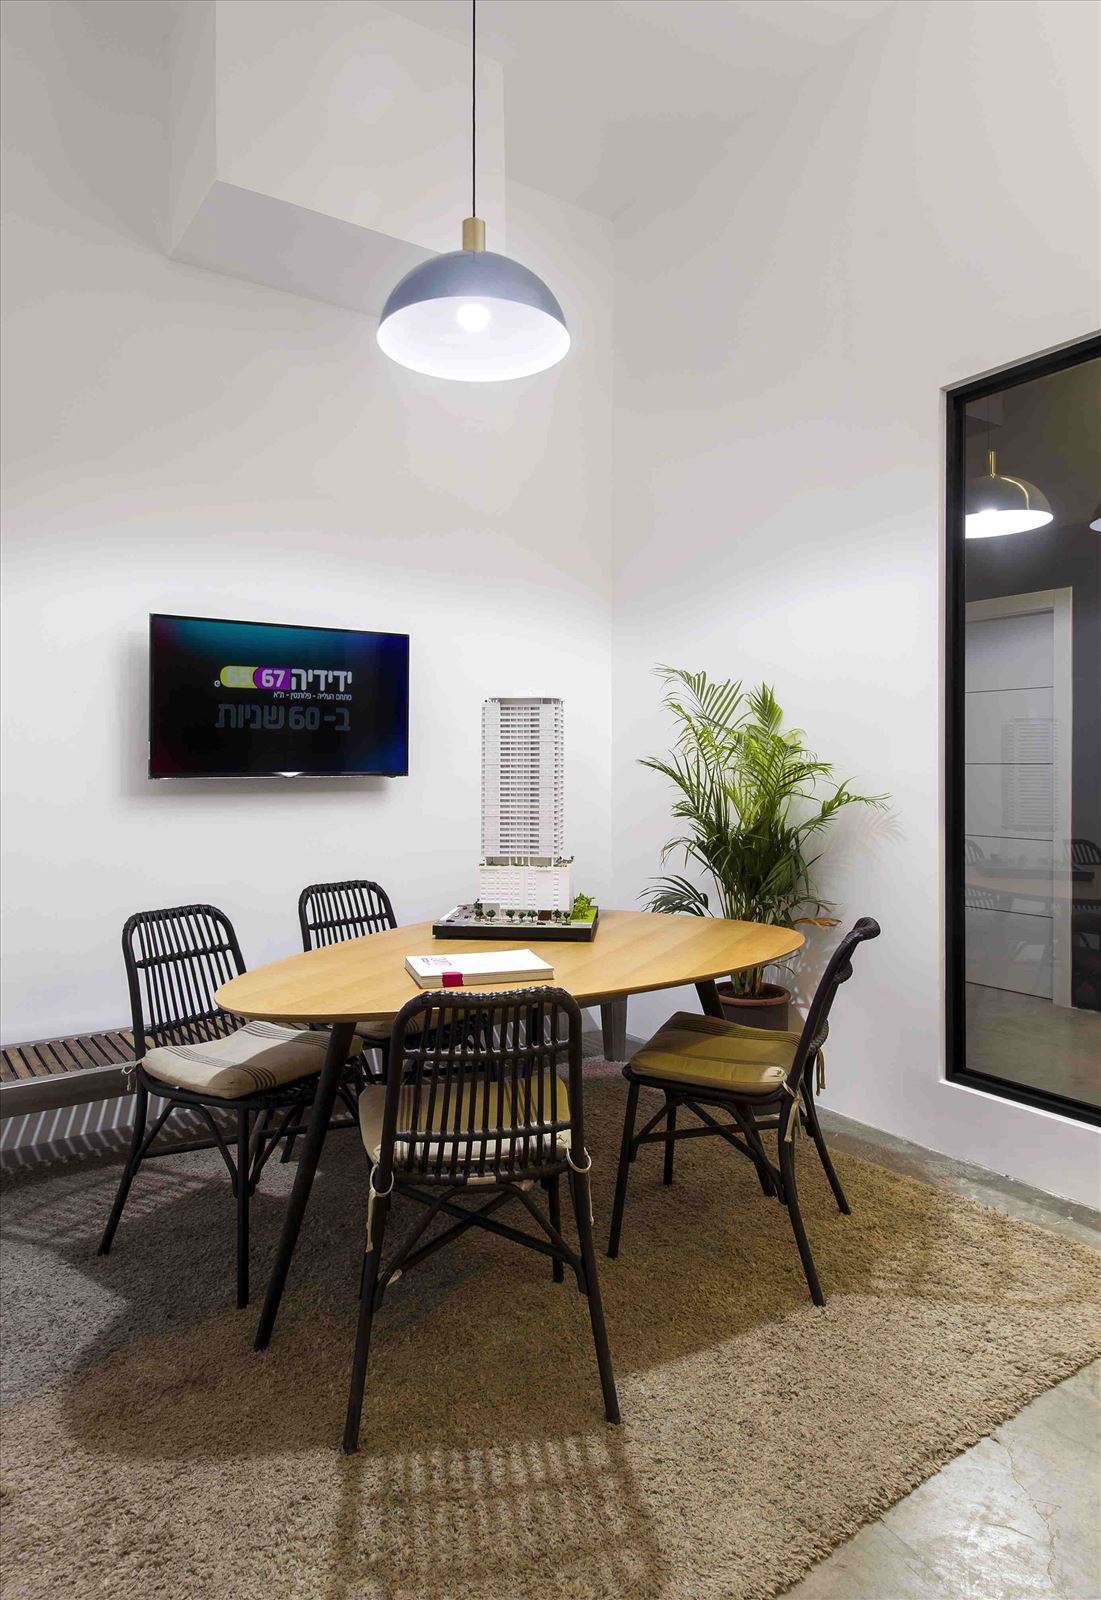 Ewave Offices תאורת תקרה במשרד נעשתה על ידי דורי קמחי